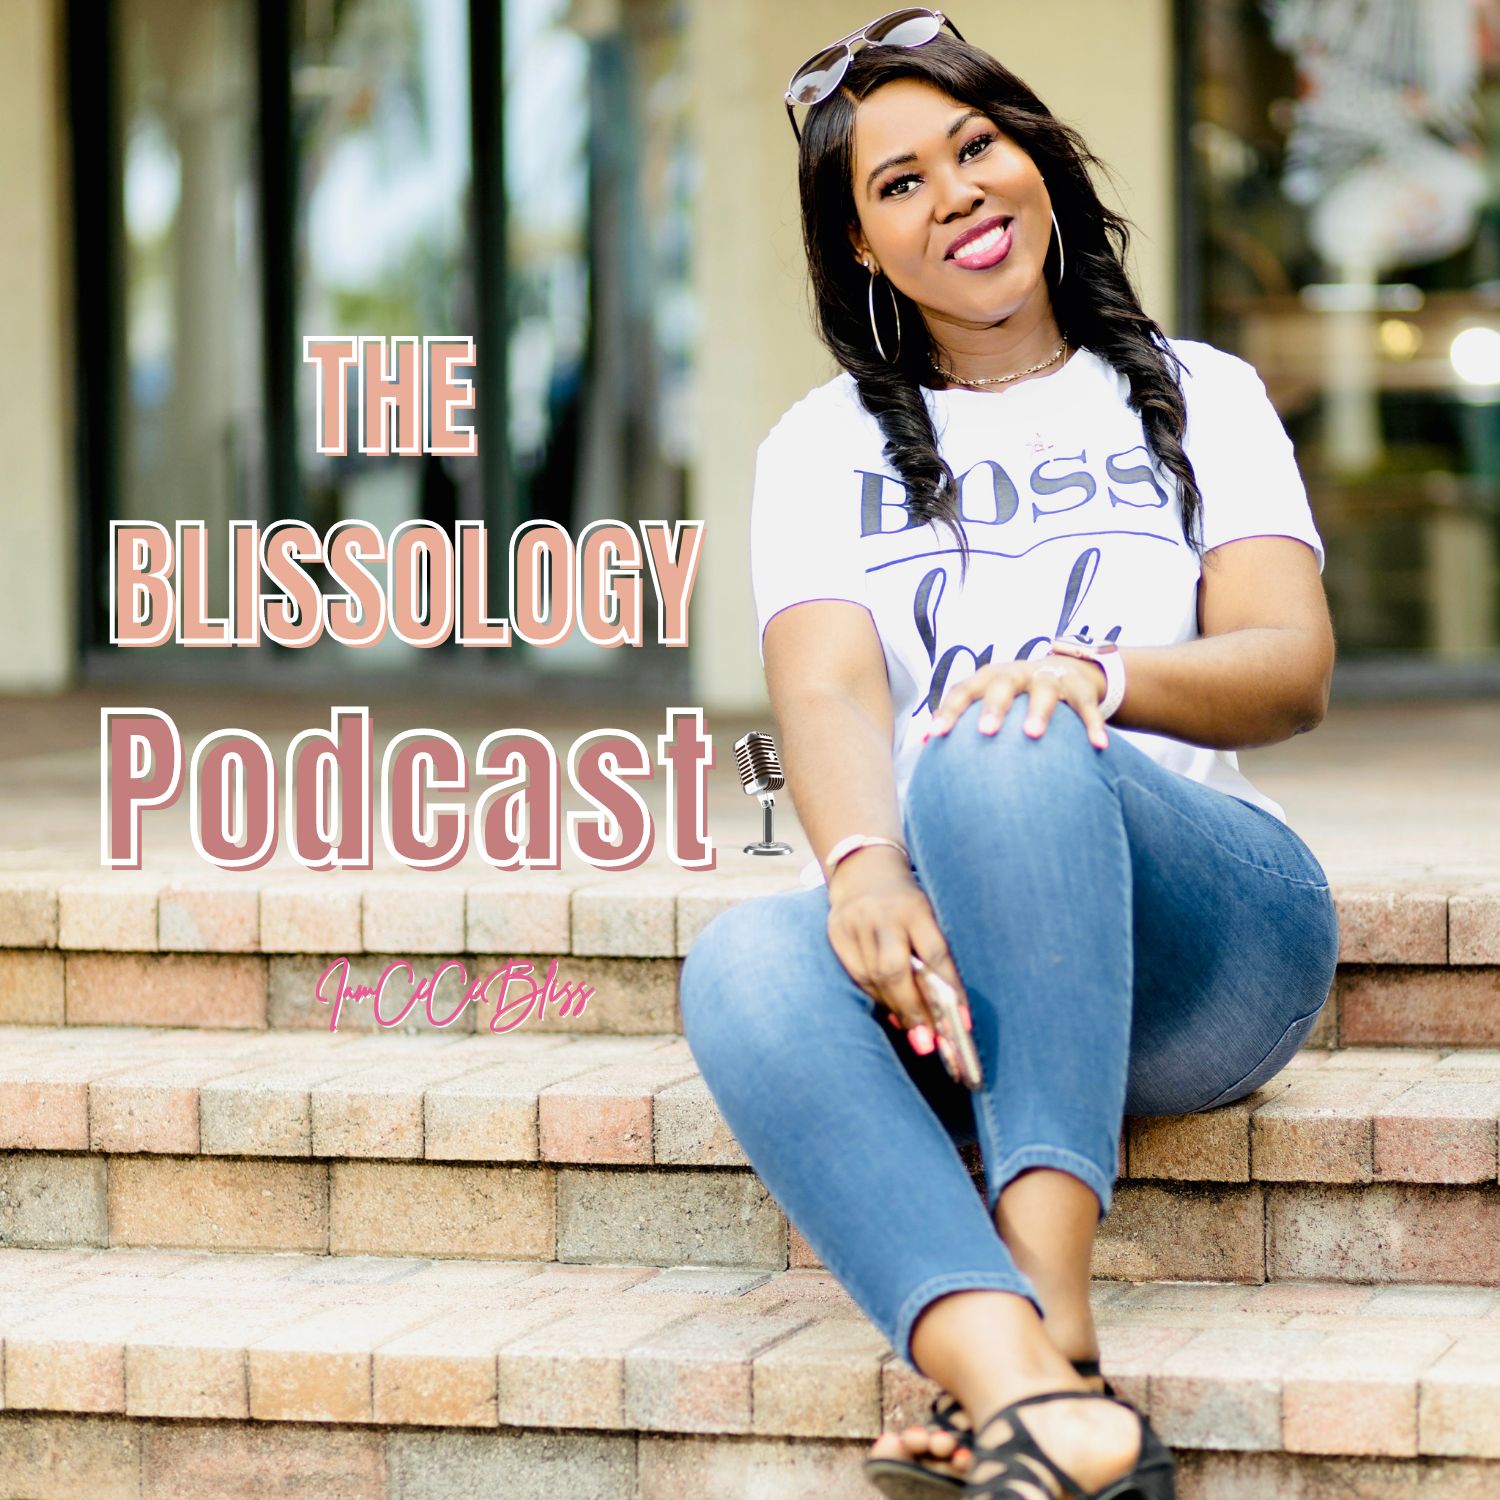 The Blissology Podcast